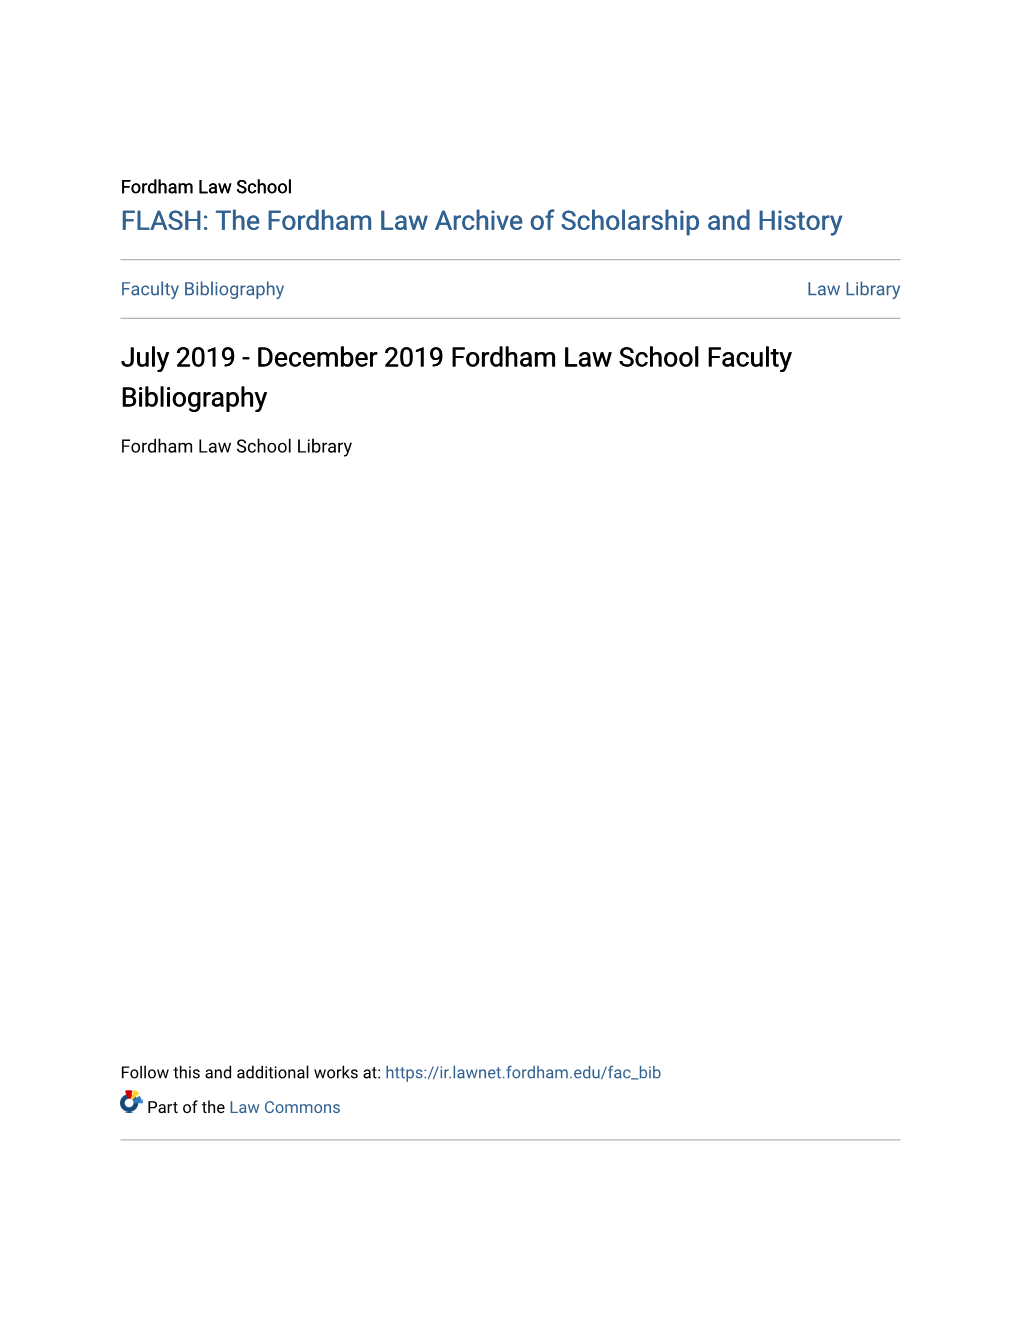 December 2019 Fordham Law School Faculty Bibliography